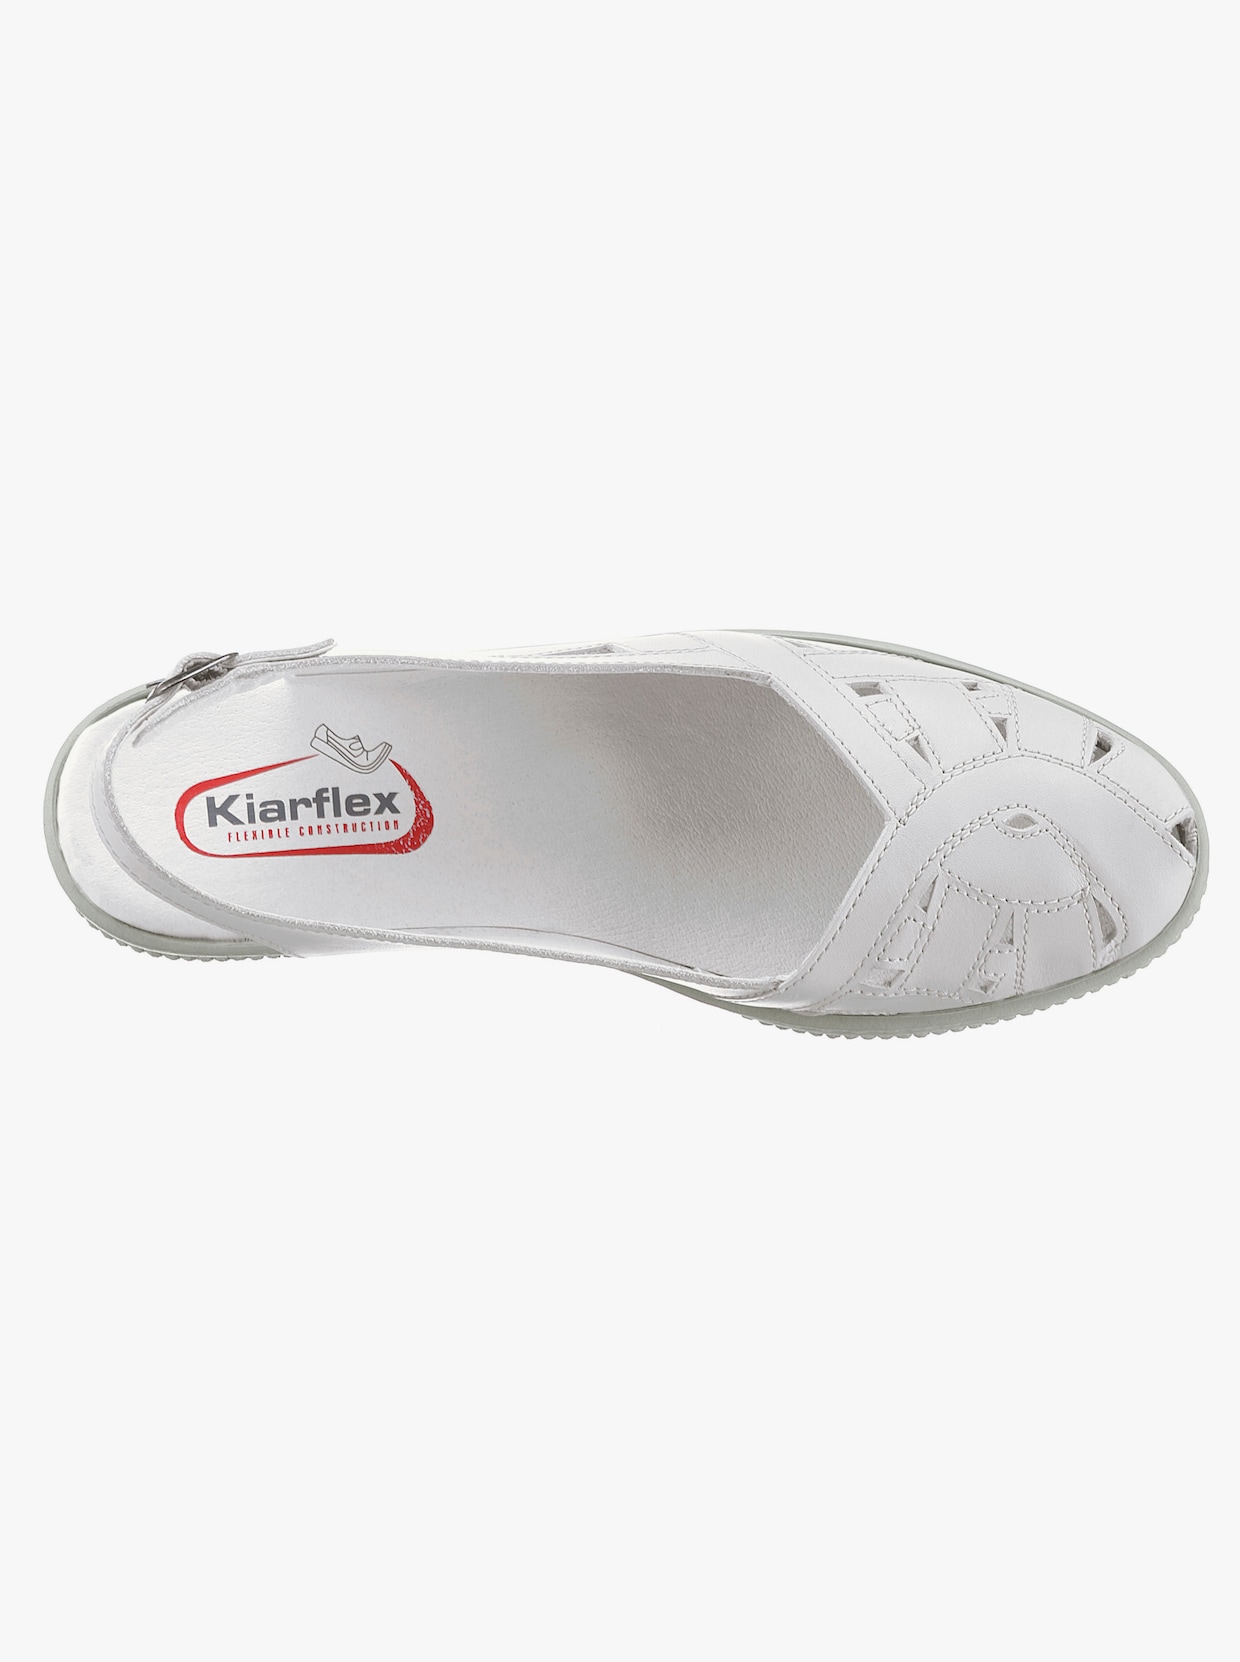 Kiarteflex Sandaletter - vit